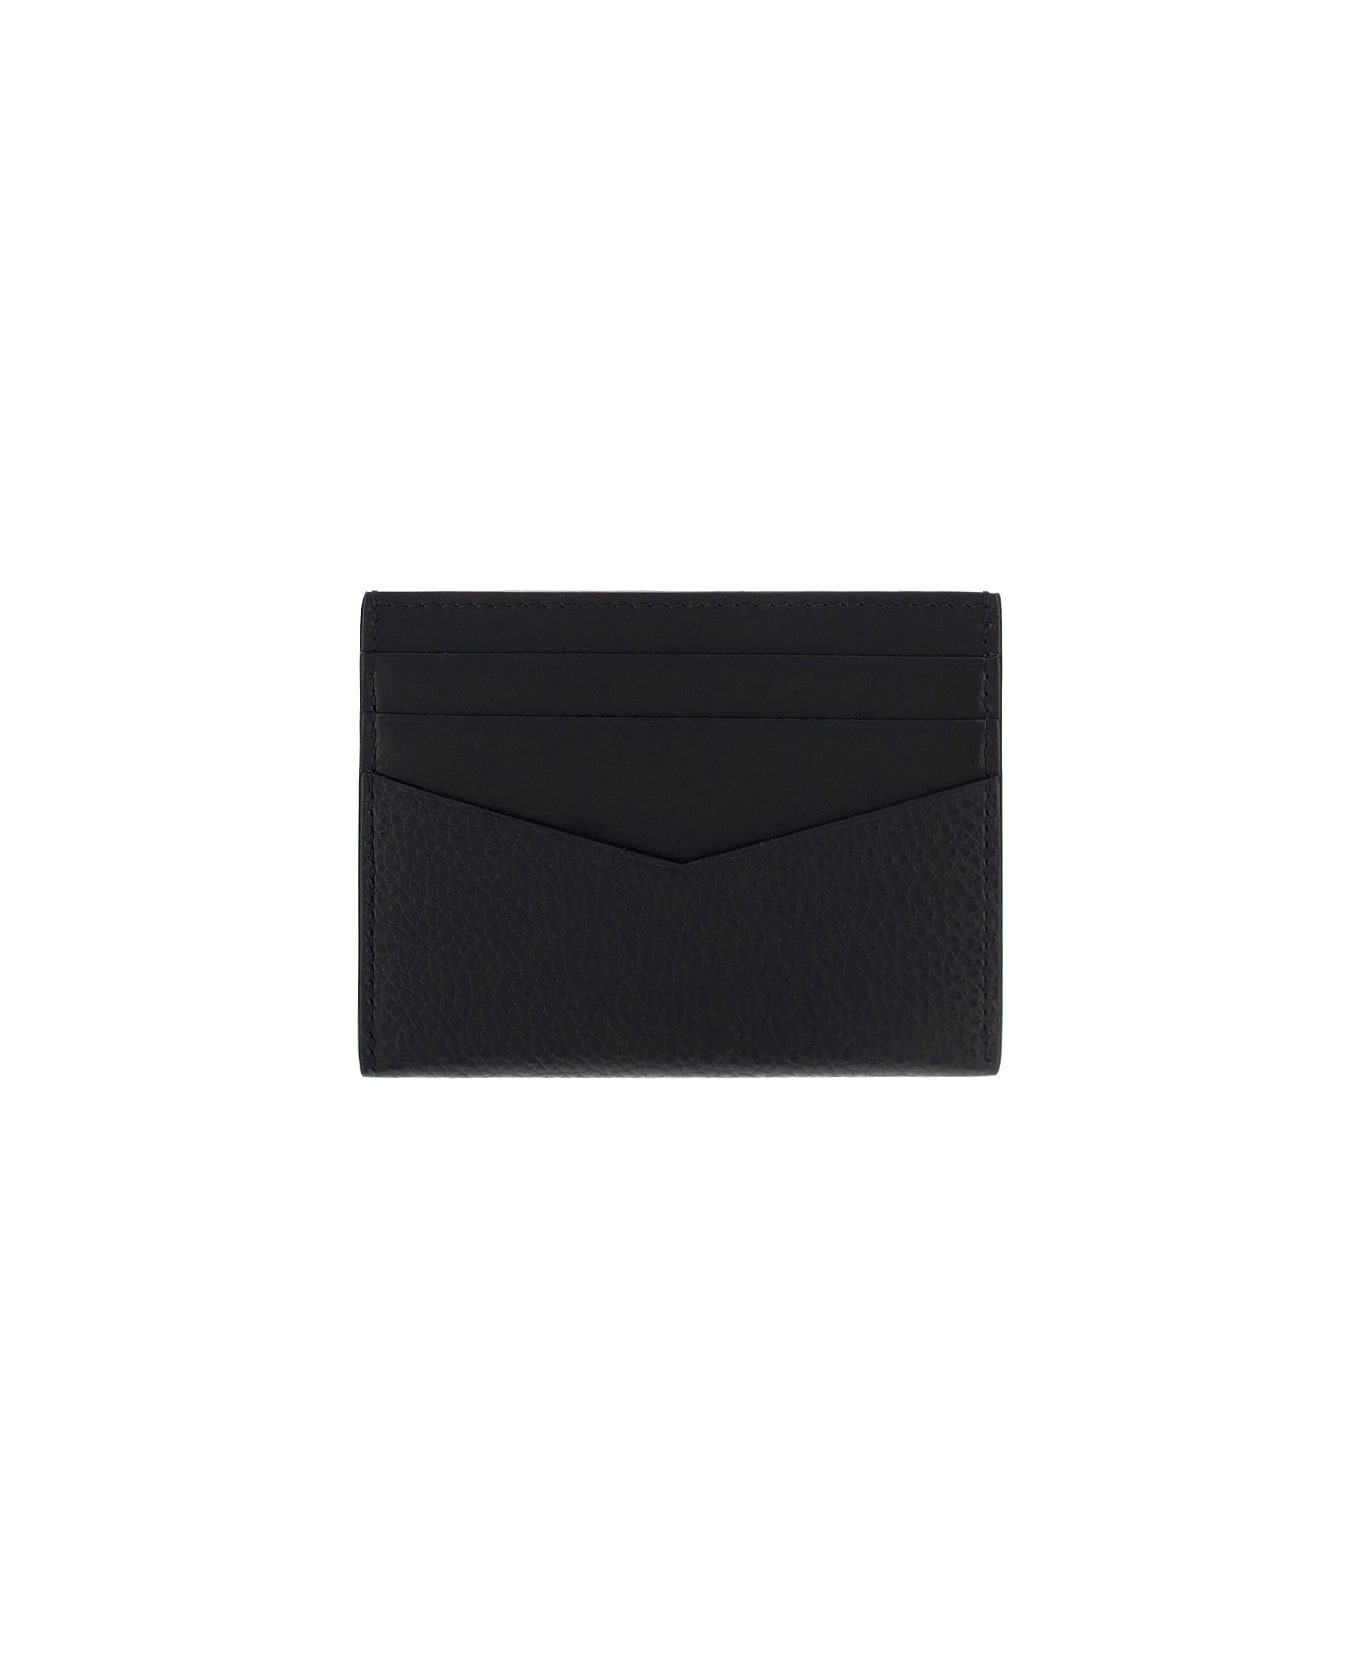 Givenchy Card Holder - Black 財布